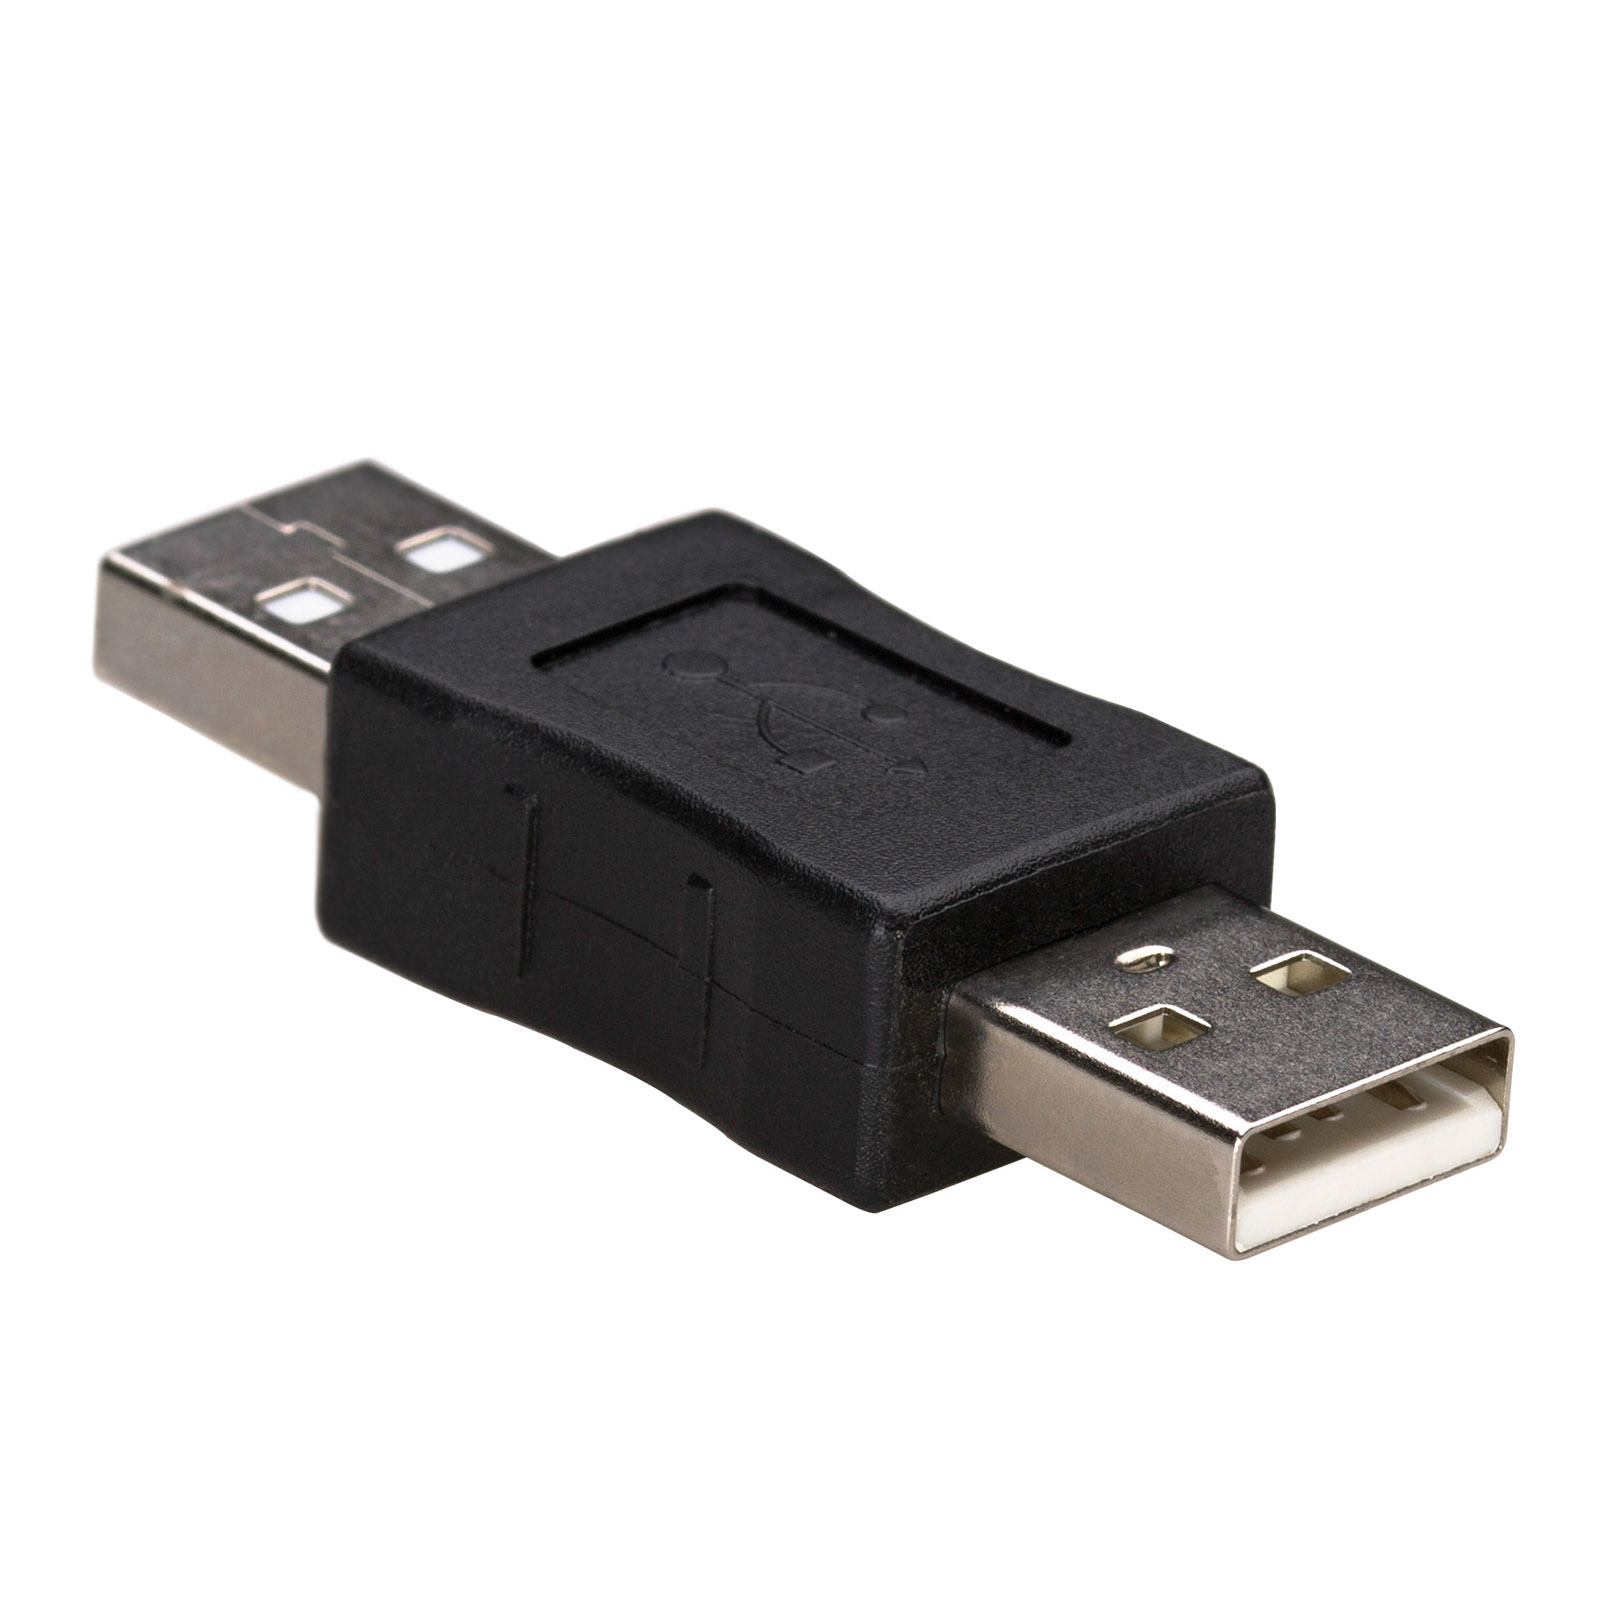 Main image Adapter AK-AD-28 USB-AM / USB-AM